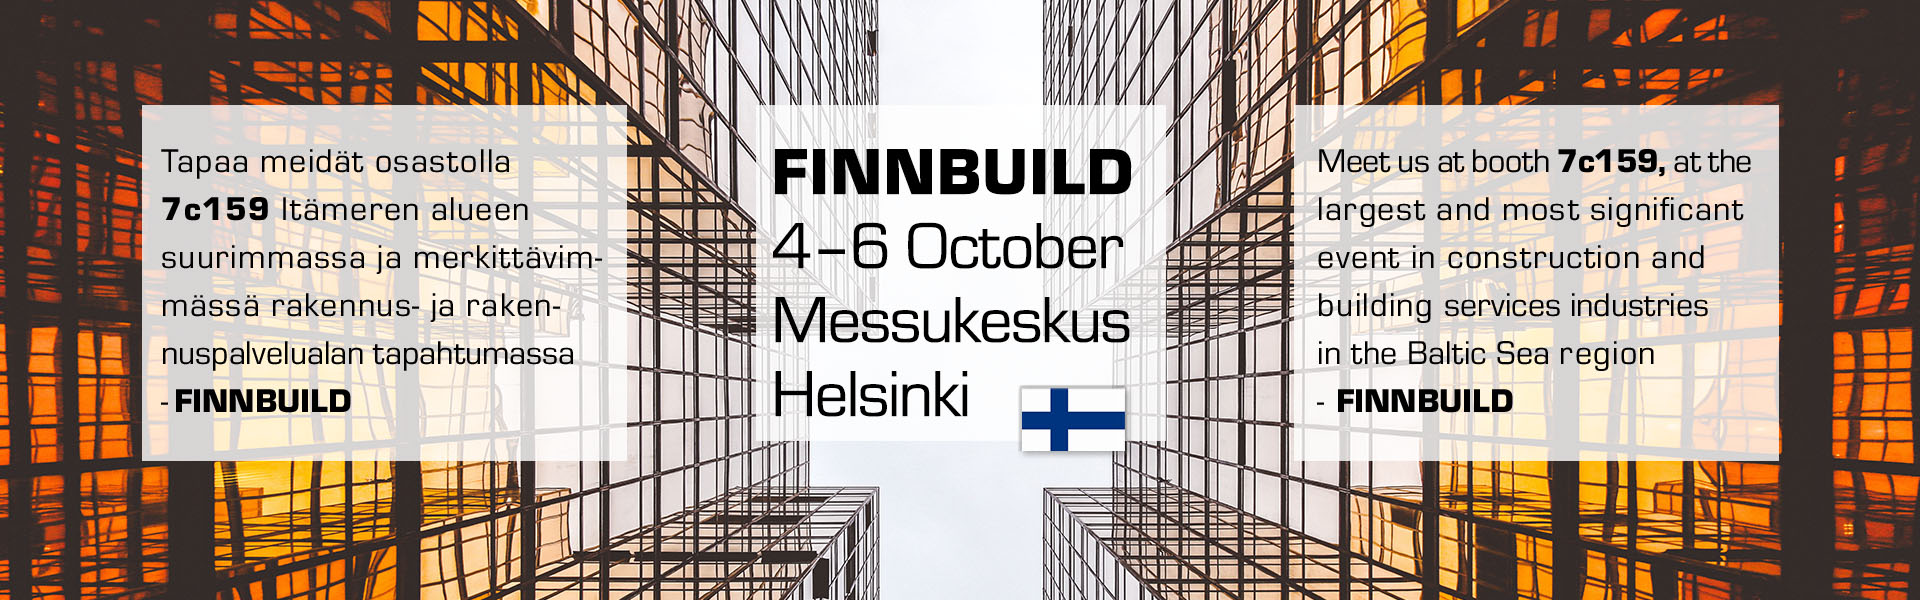 Finnbuild banner_1920x600px_GB_vers A.jpg